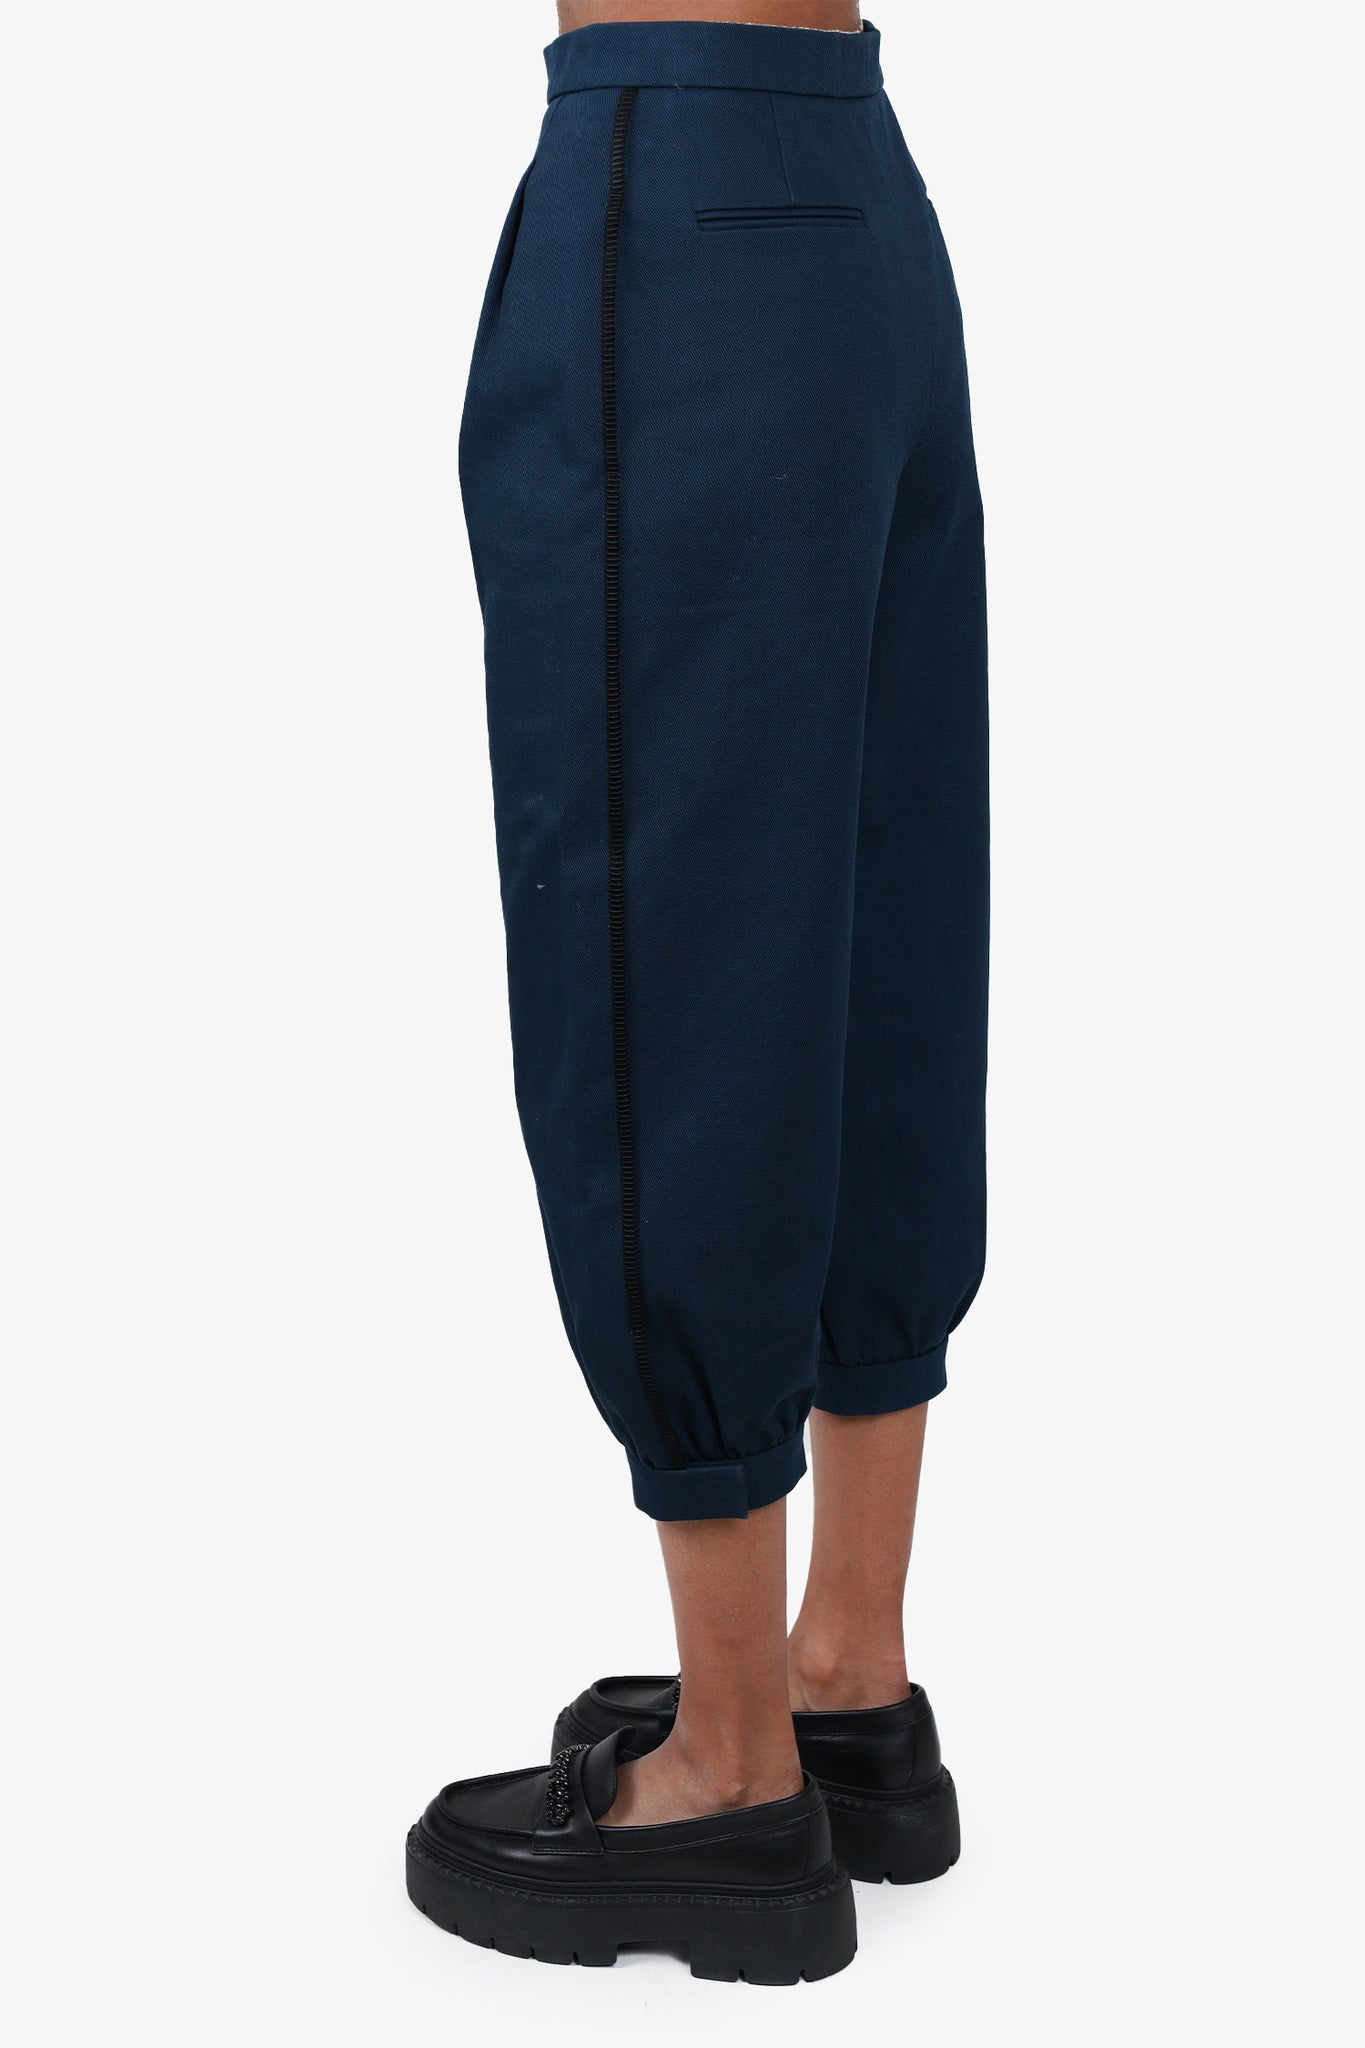 Fendi Grey/Tan Logo Leggings Size 36 – Mine & Yours